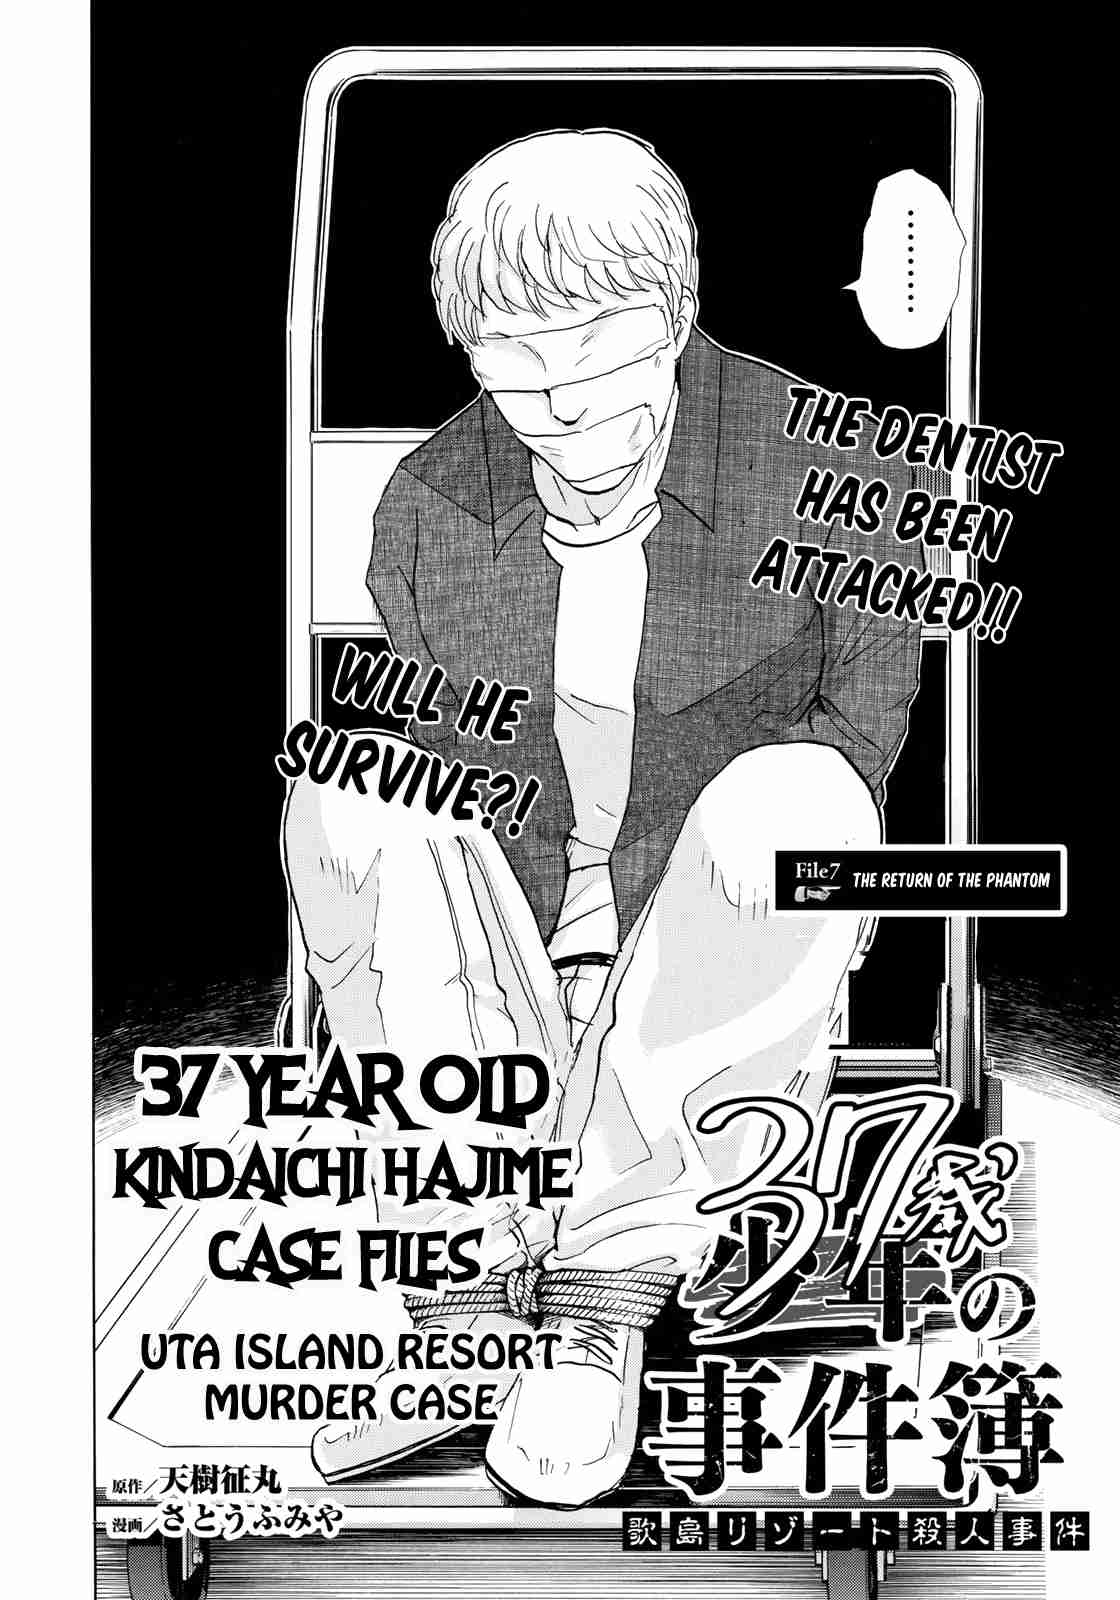 37 Year Old Kindaichi Hajime Case Files Vol. 1 Ch. 7 Uta Island Resort Murder Case (File 7)